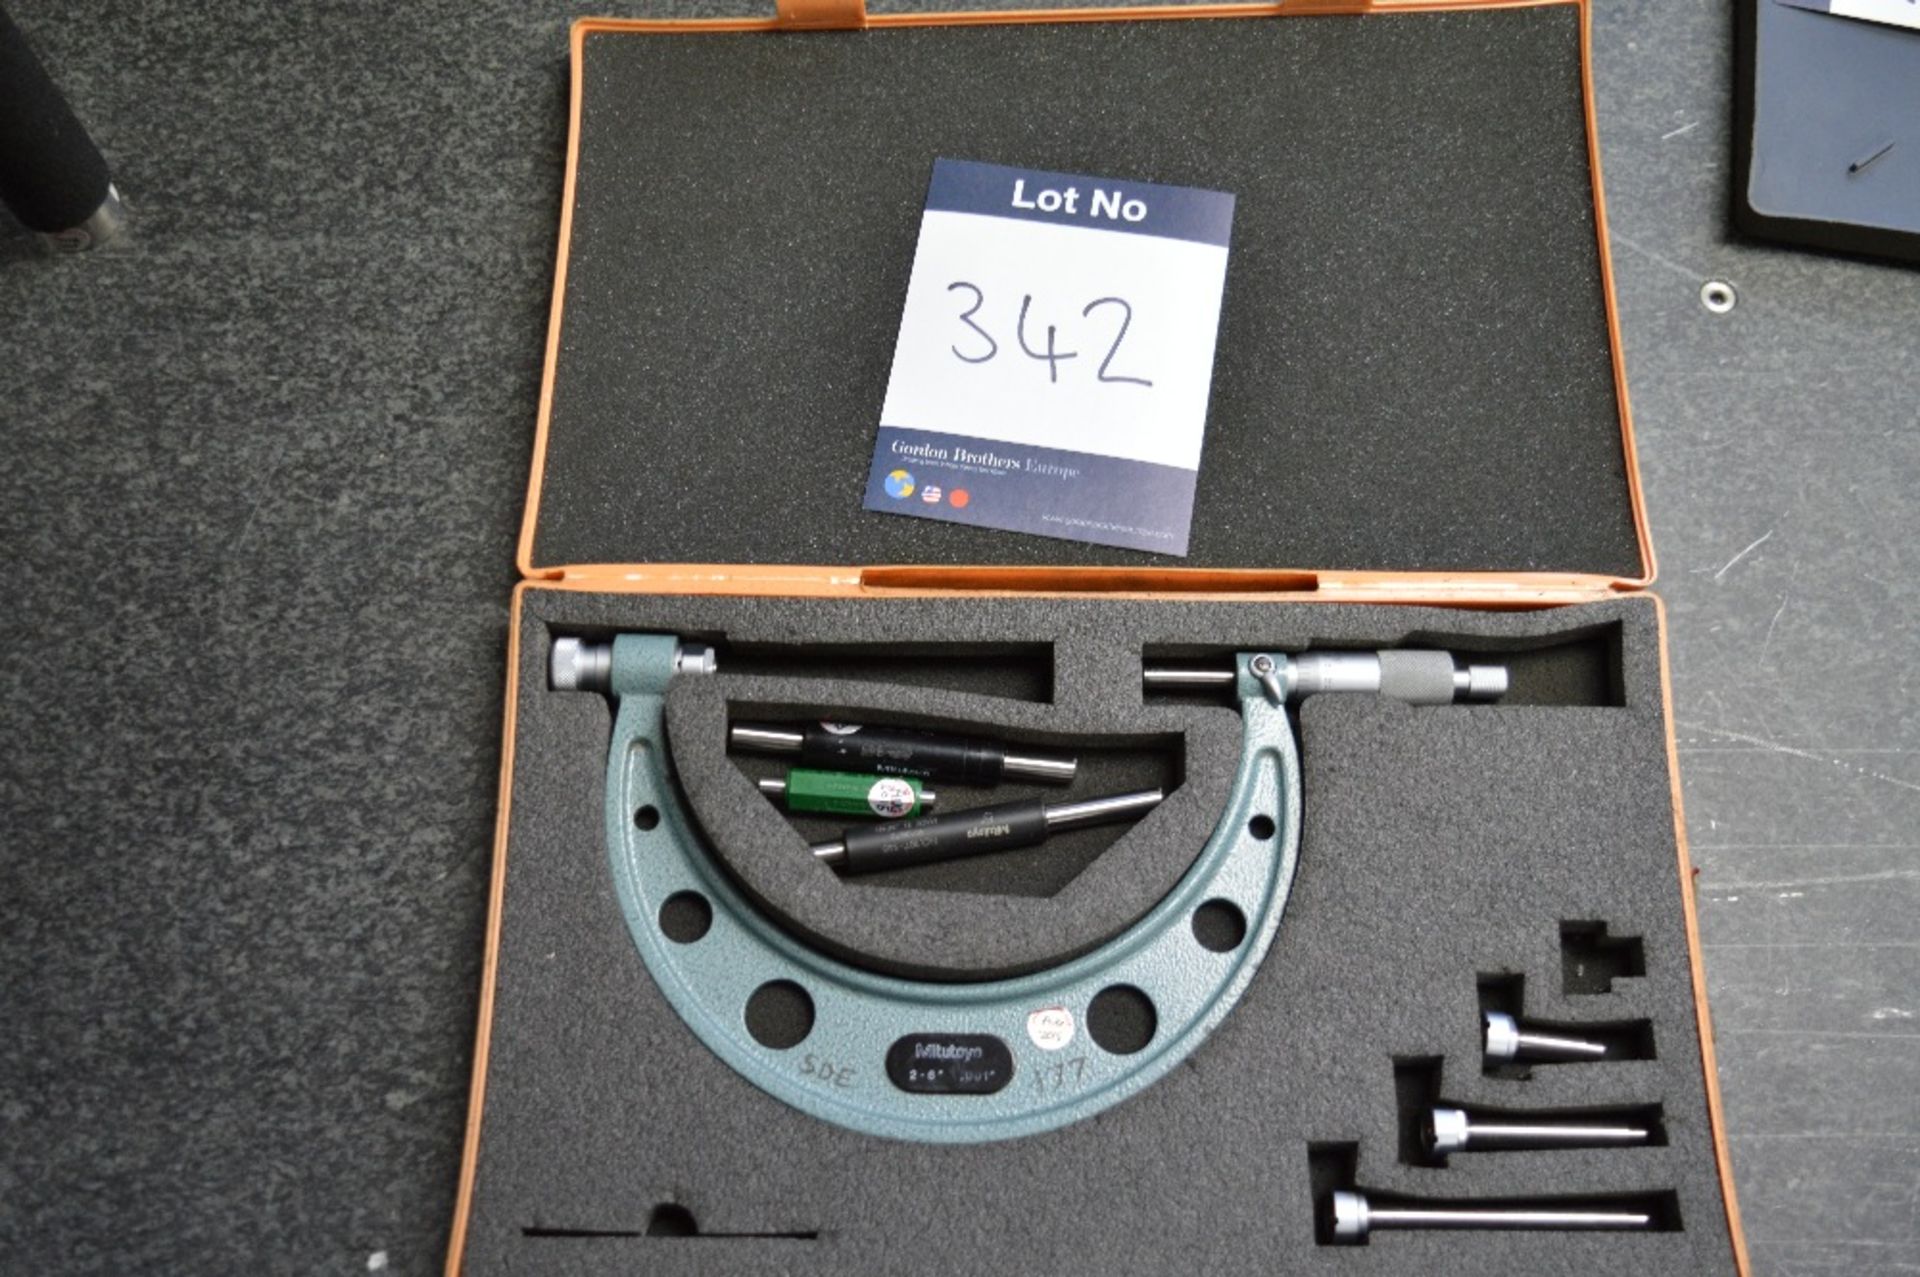 Mitutoyo 2-6" Micrometer
Serial Number: 104-162